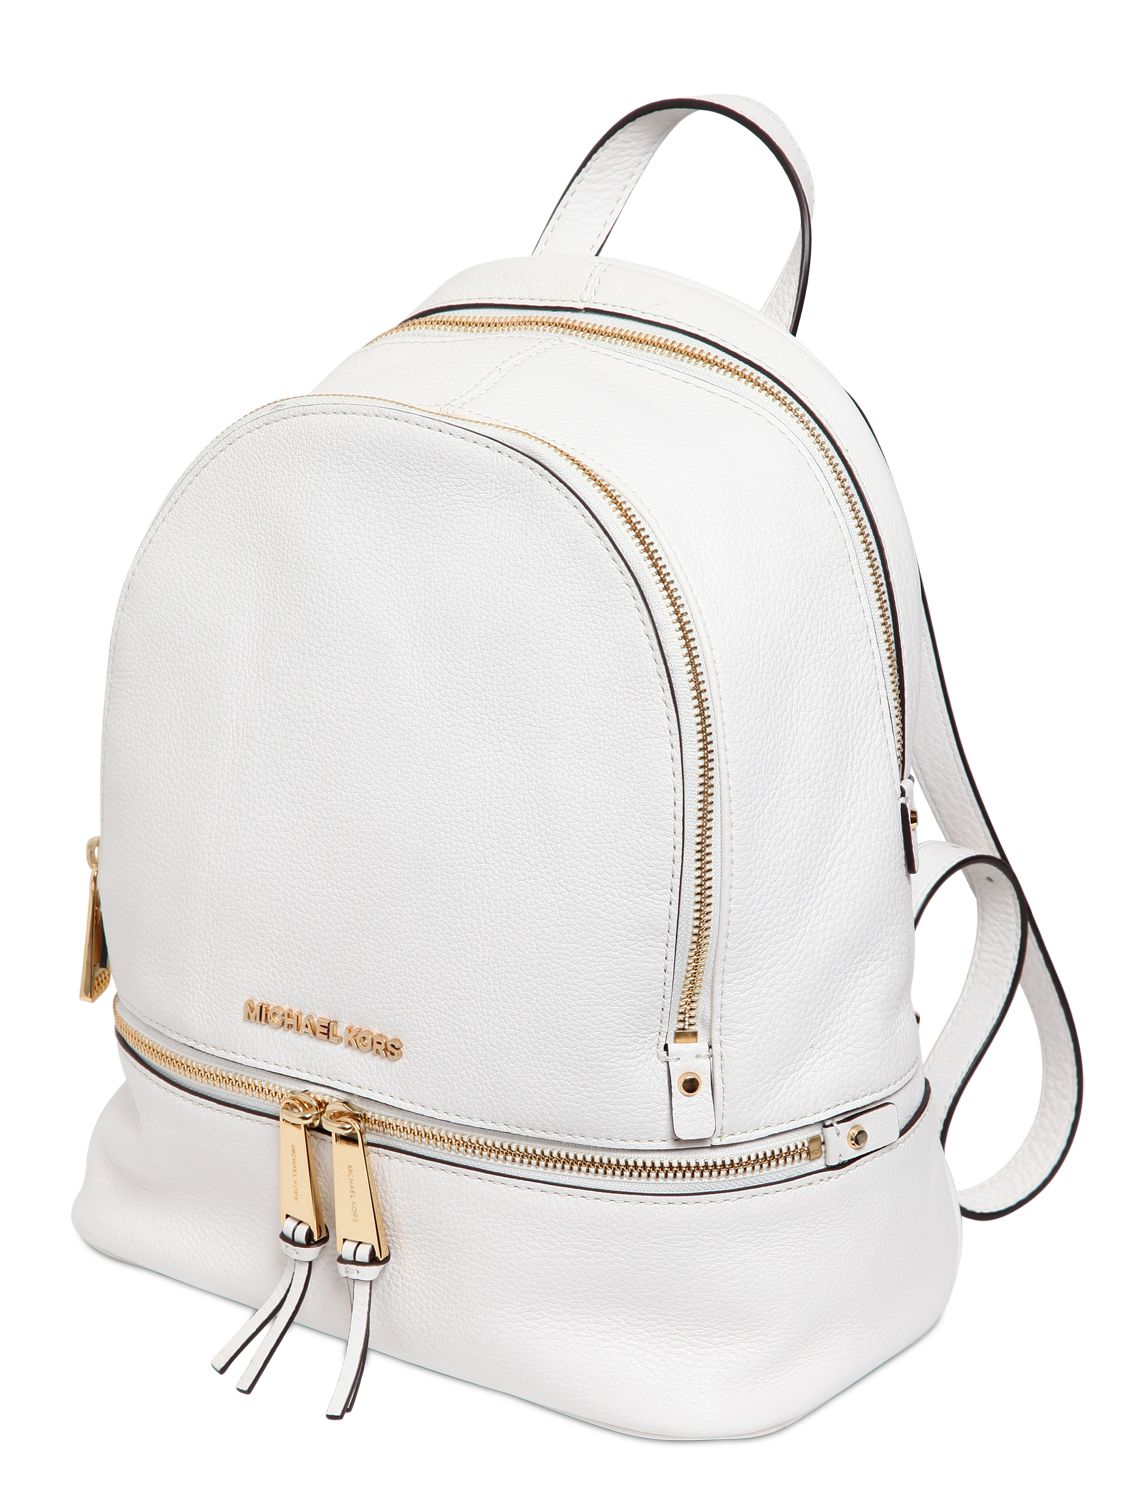 White Mini Backpack Fabric | NAR Media Kit